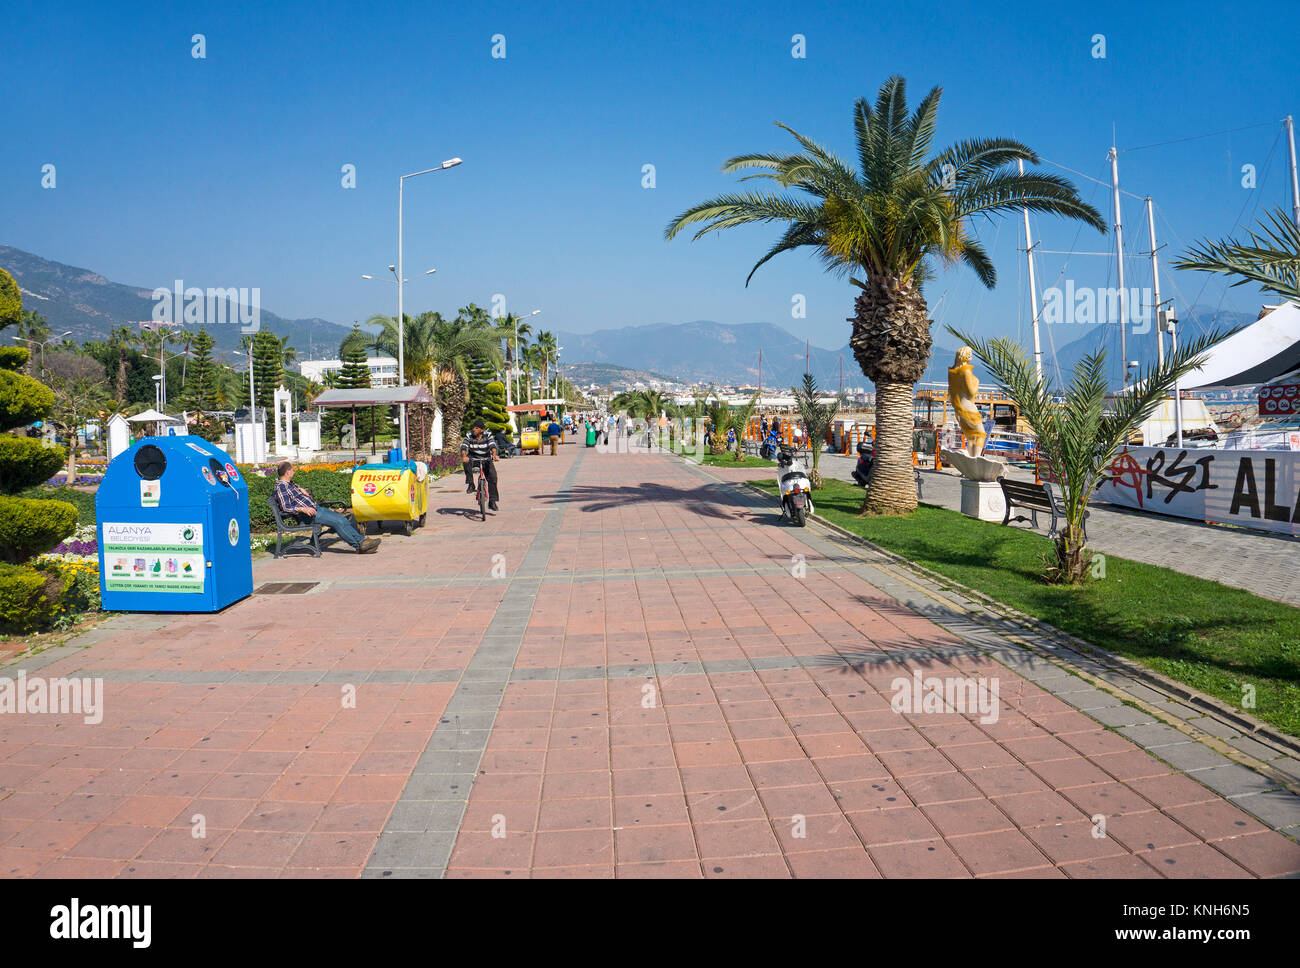 Promenade du port, Alanya, Turkish riviera, Turquie Banque D'Images